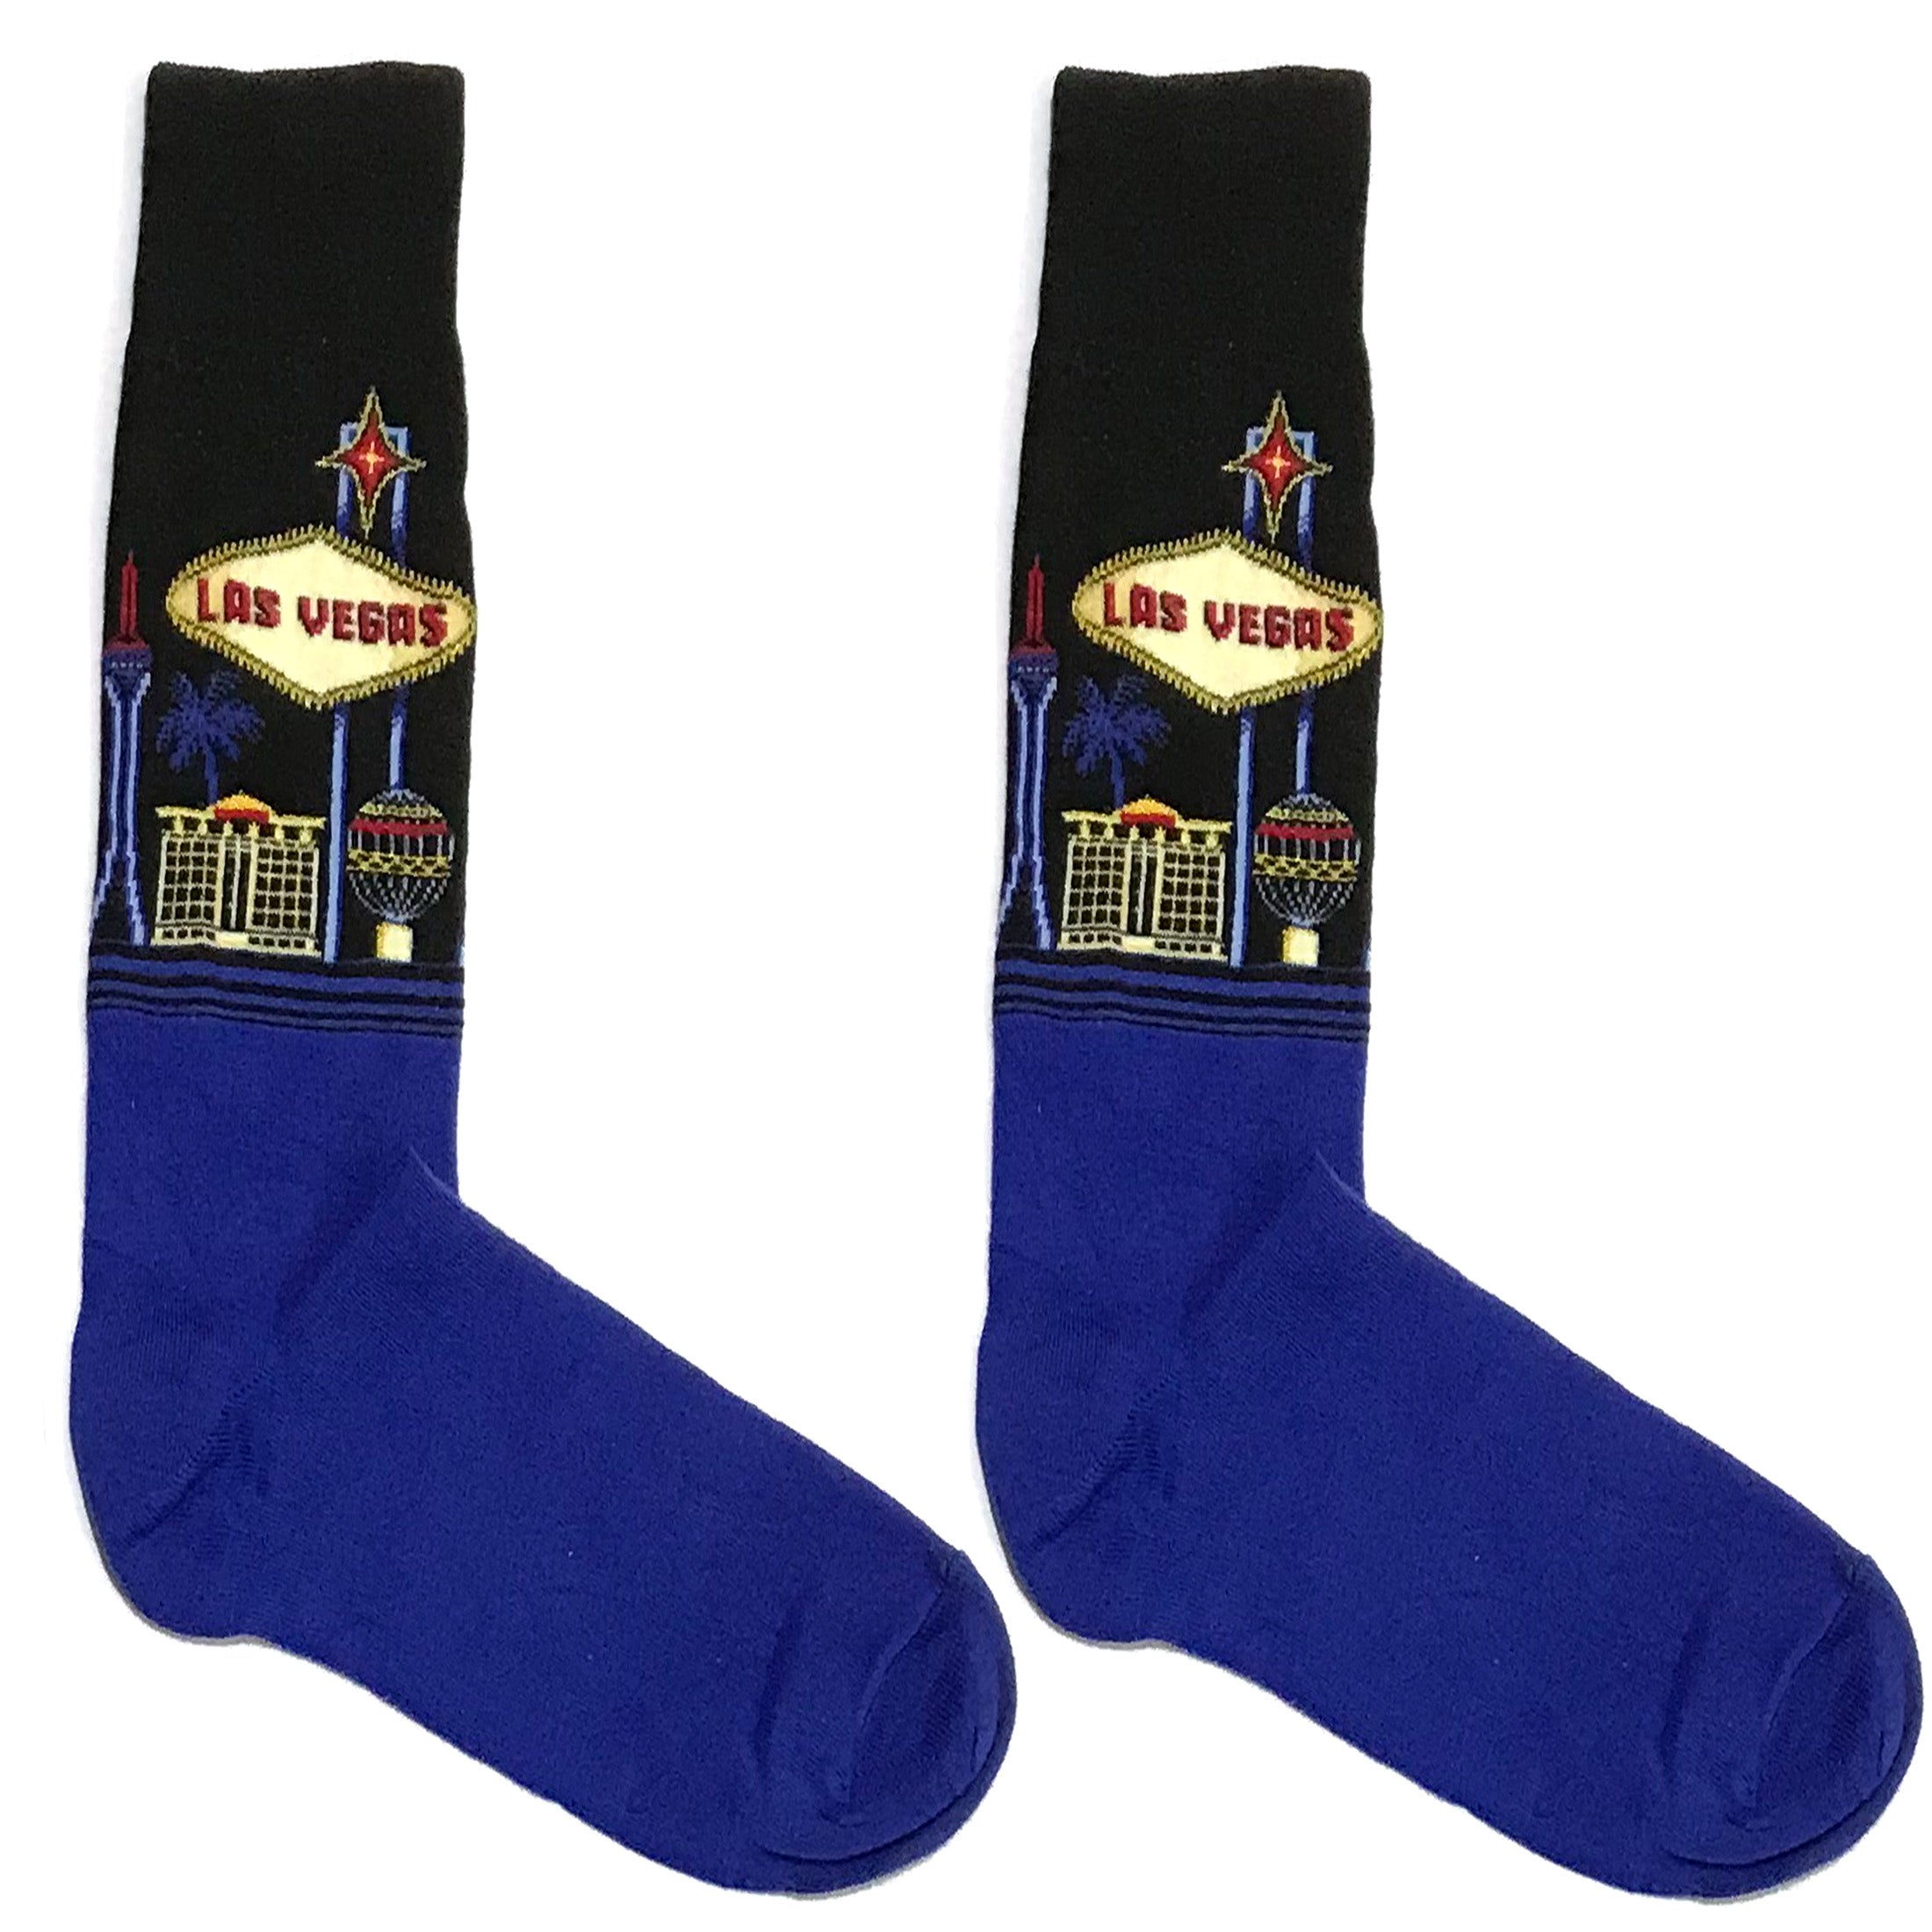 Las Vegas socks